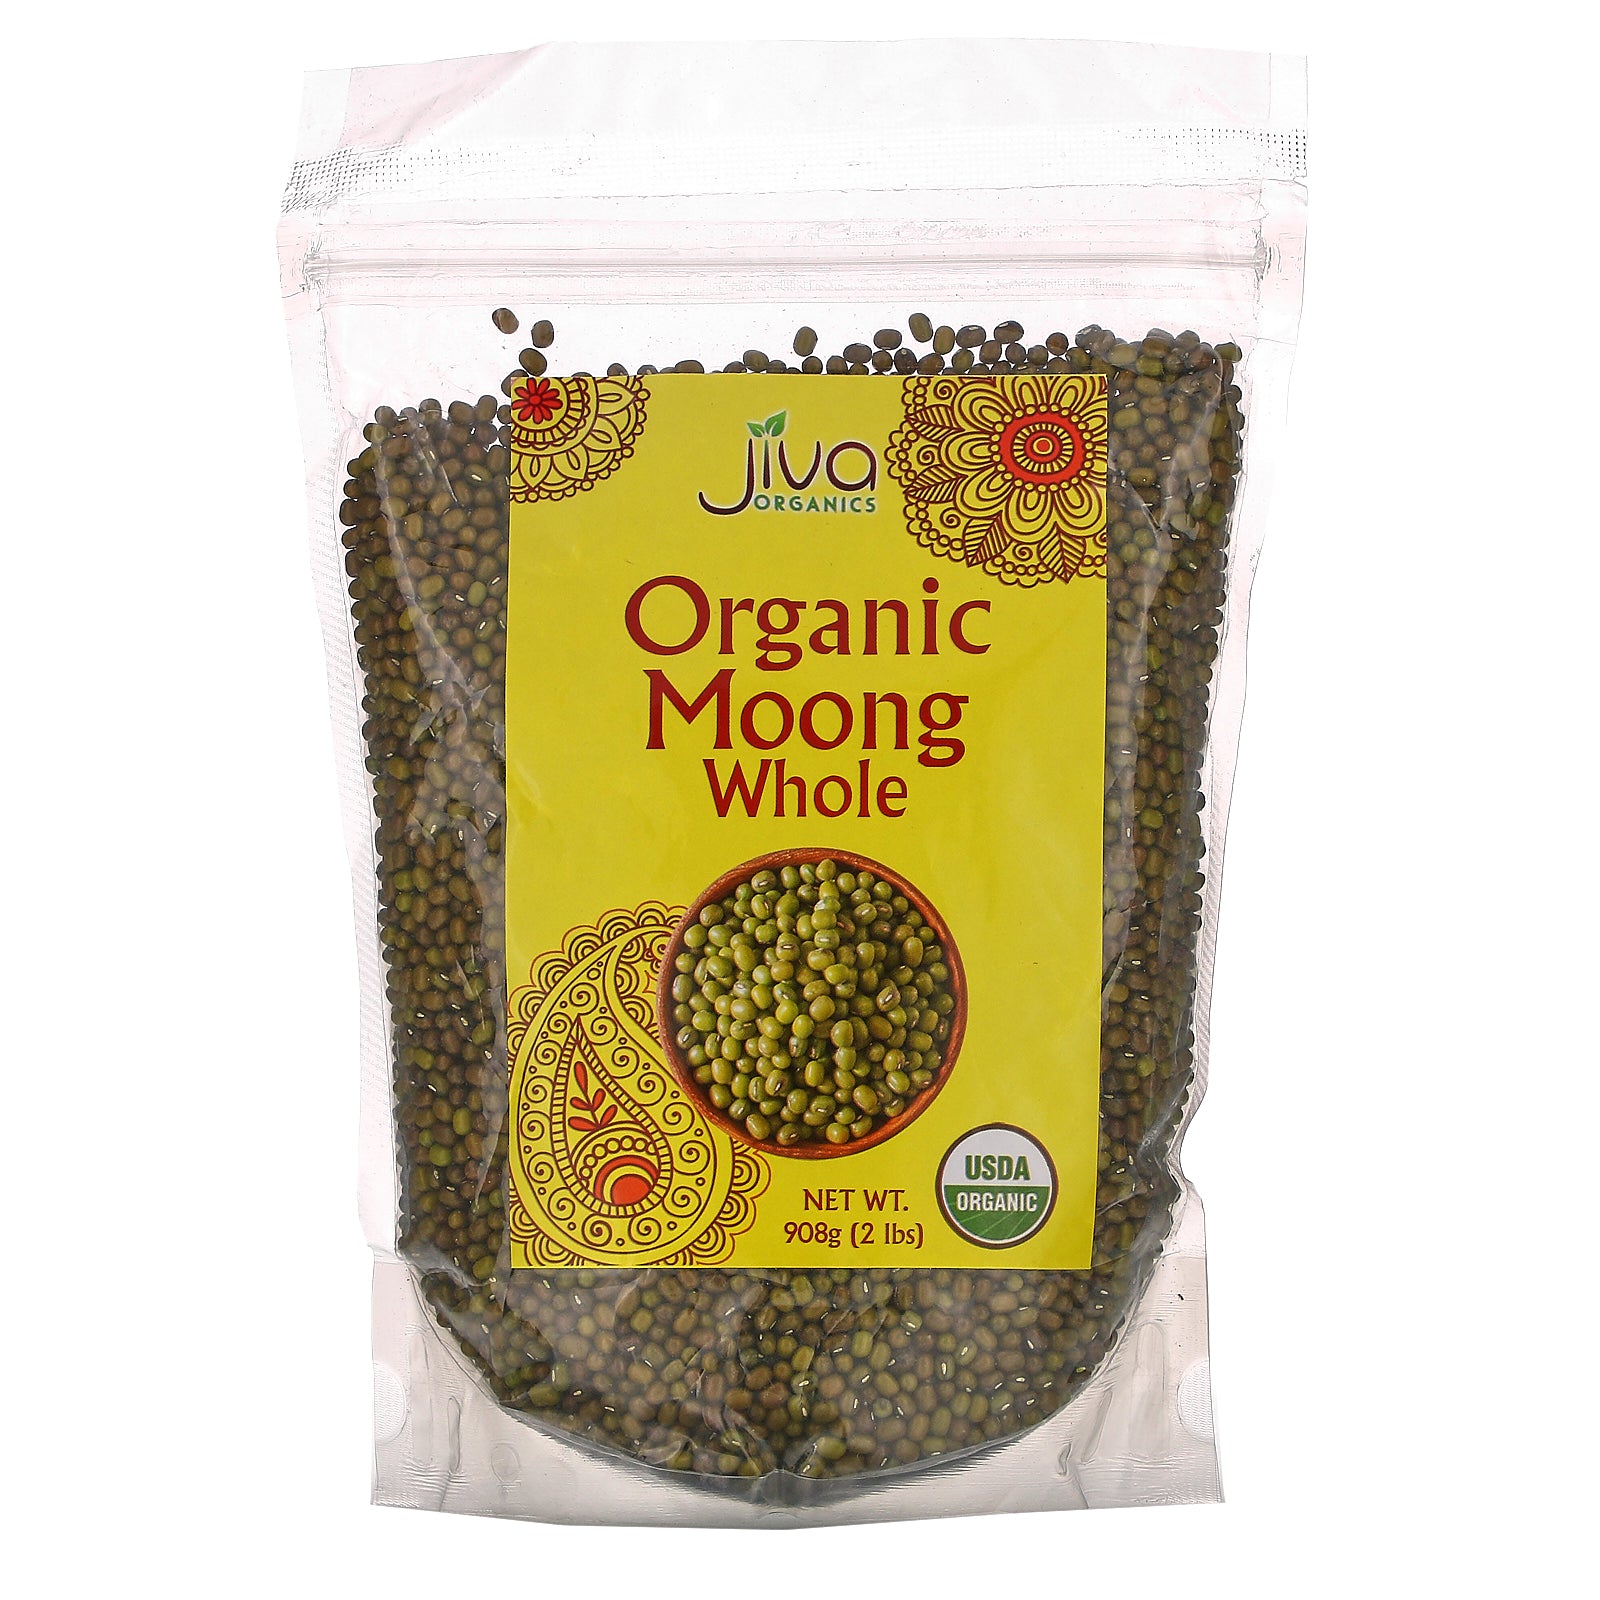 Jiva Organics, Organic Moong Whole, 2 lbs (908 g)